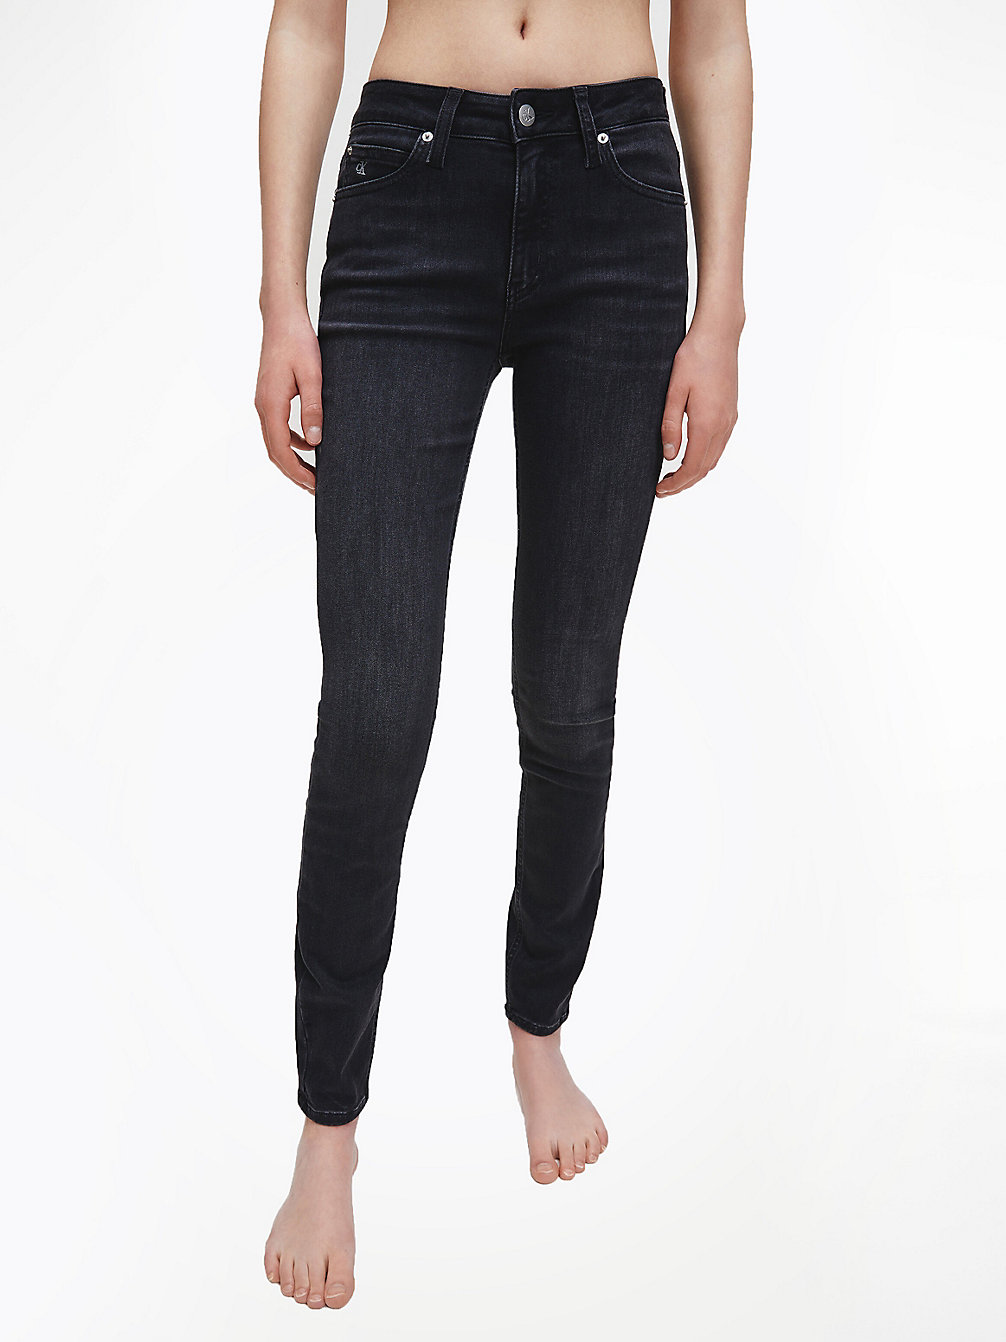 ZZ002 WASHED BLACK Mid Rise Skinny Jeans undefined Damen Calvin Klein